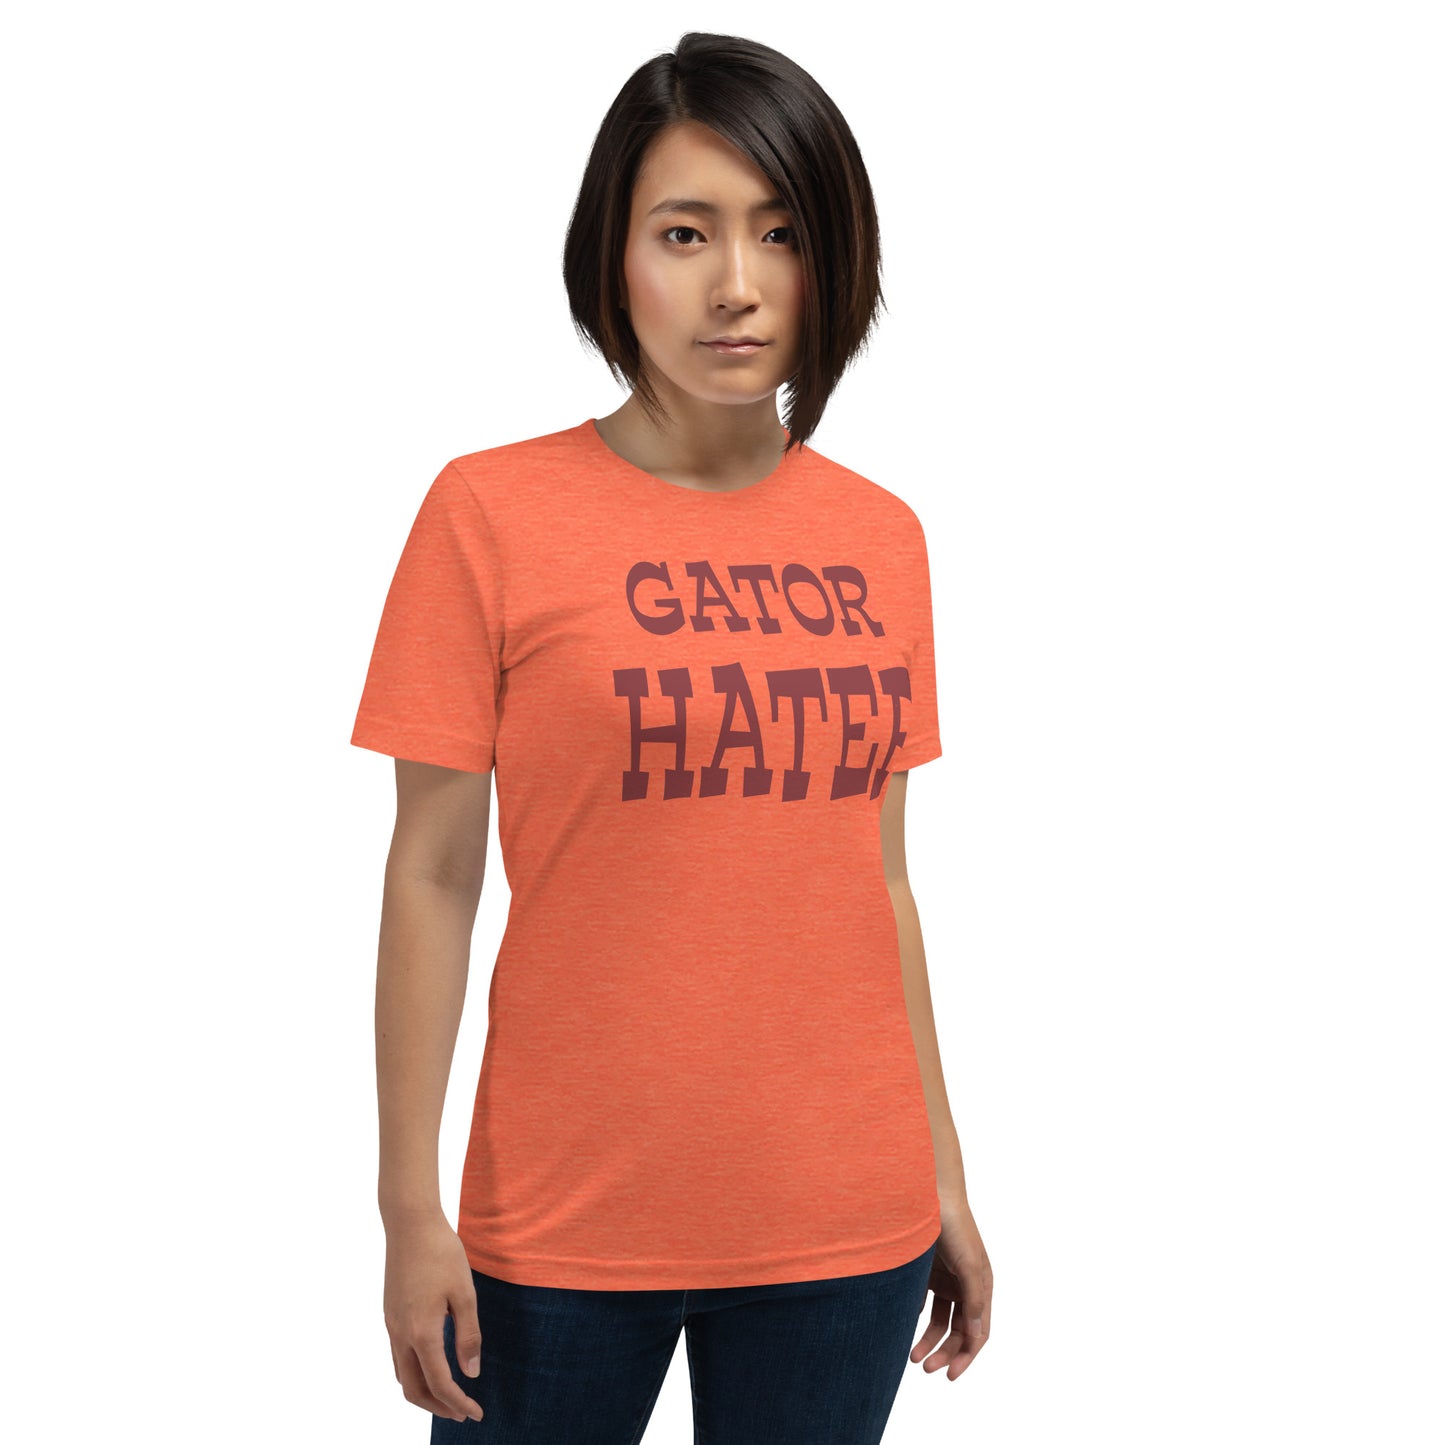 Gator Hater Garnet Logo Unisex t-shirt S-XL